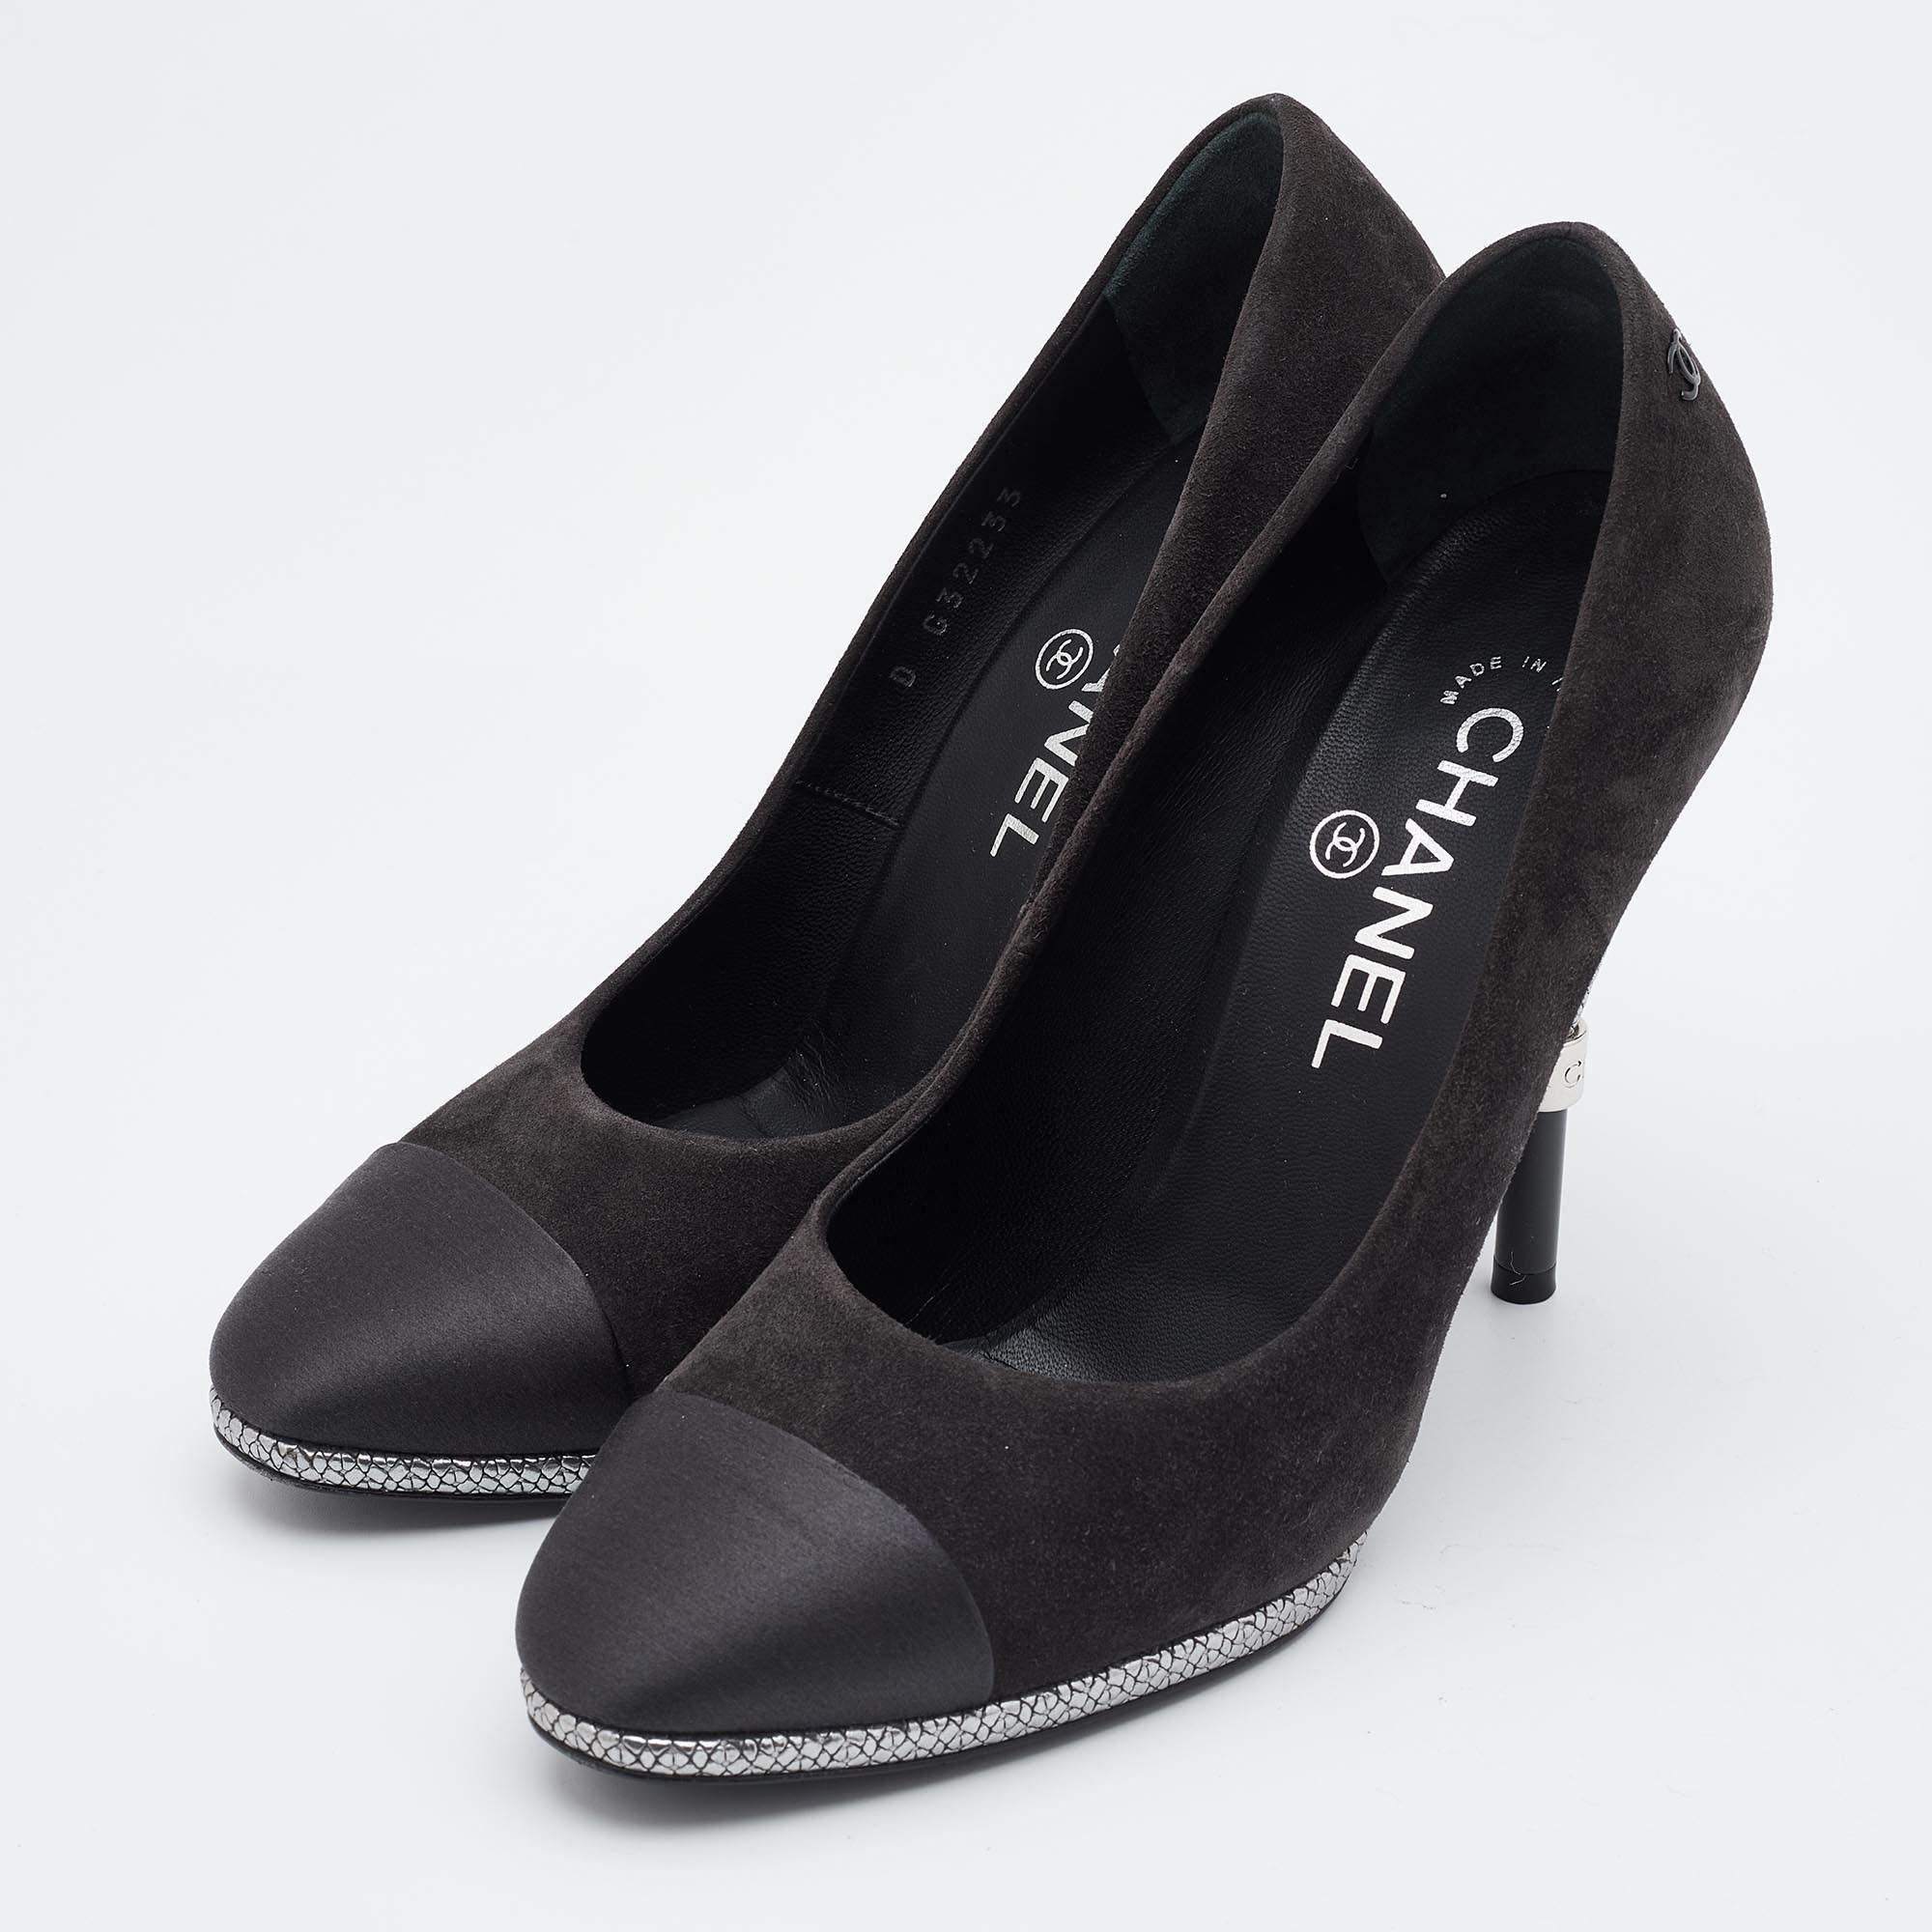 Women's Chanel Black Suede and Satin Cap Toe CC Pumps Size 37.5